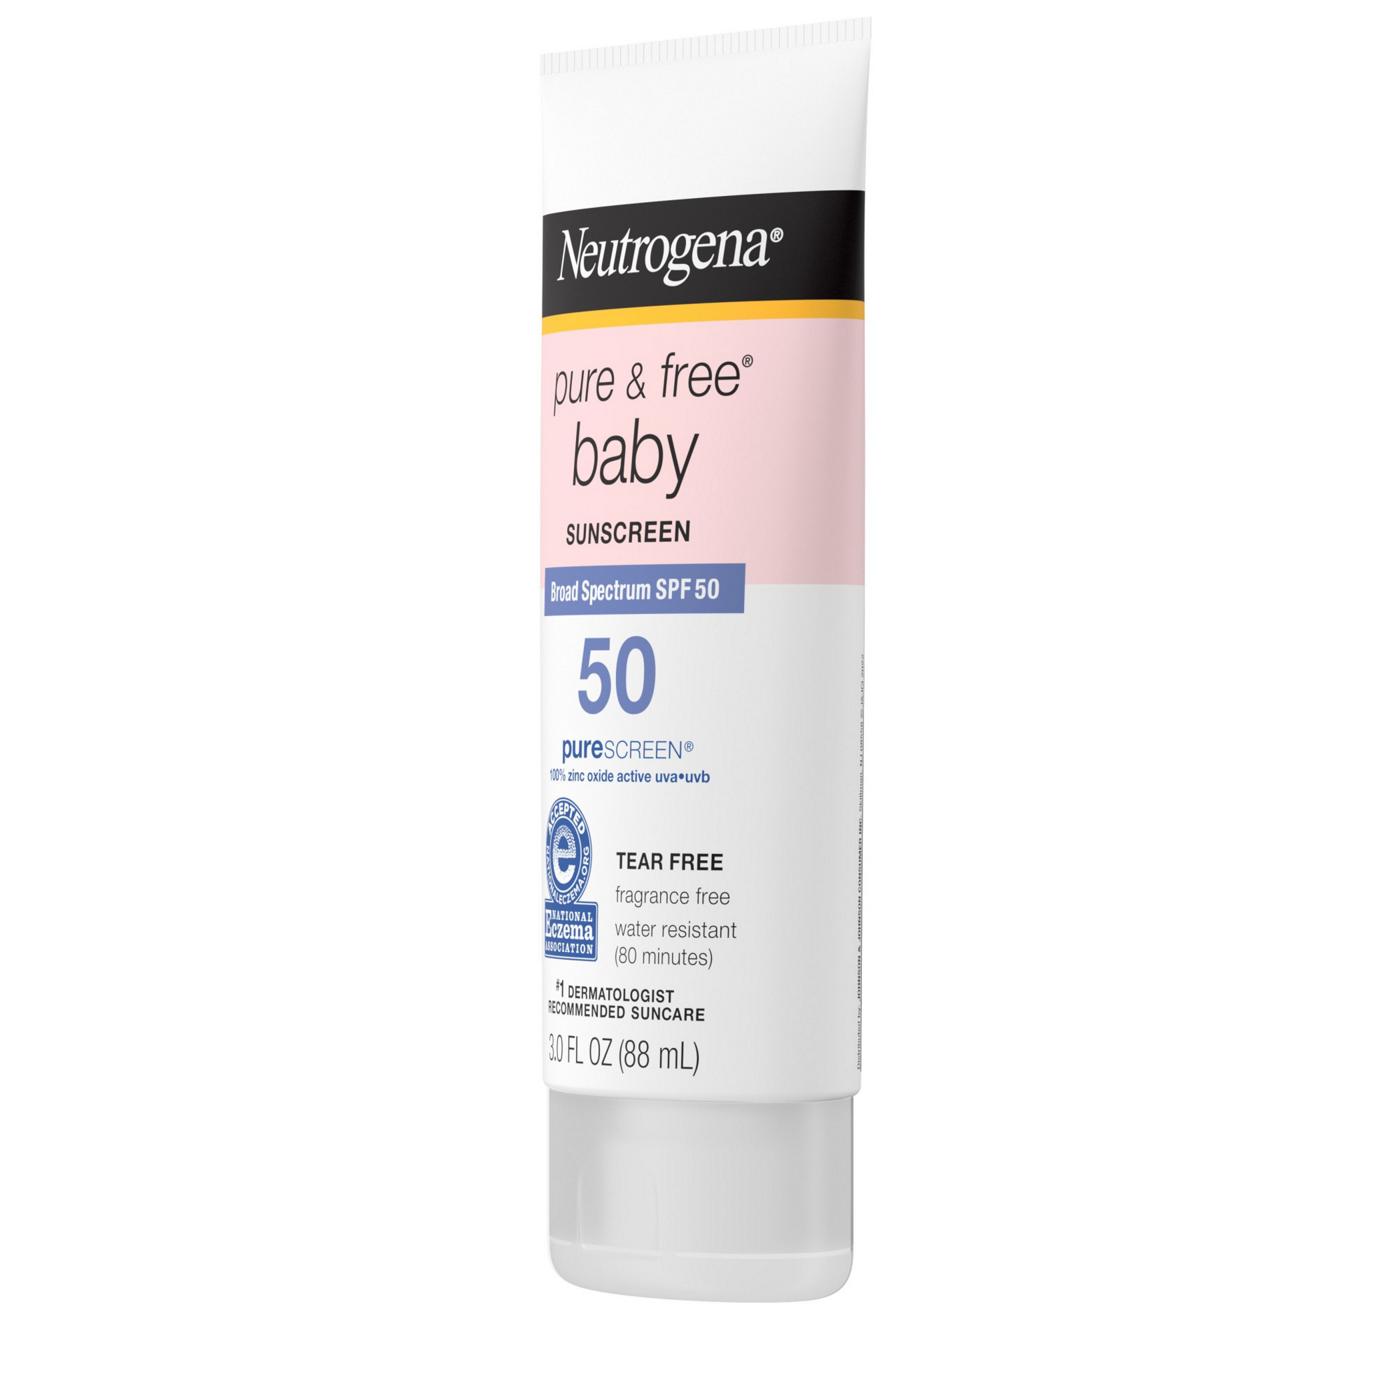 Neutrogena Pure & Free Baby Sunscreen - SPF 50; image 3 of 8